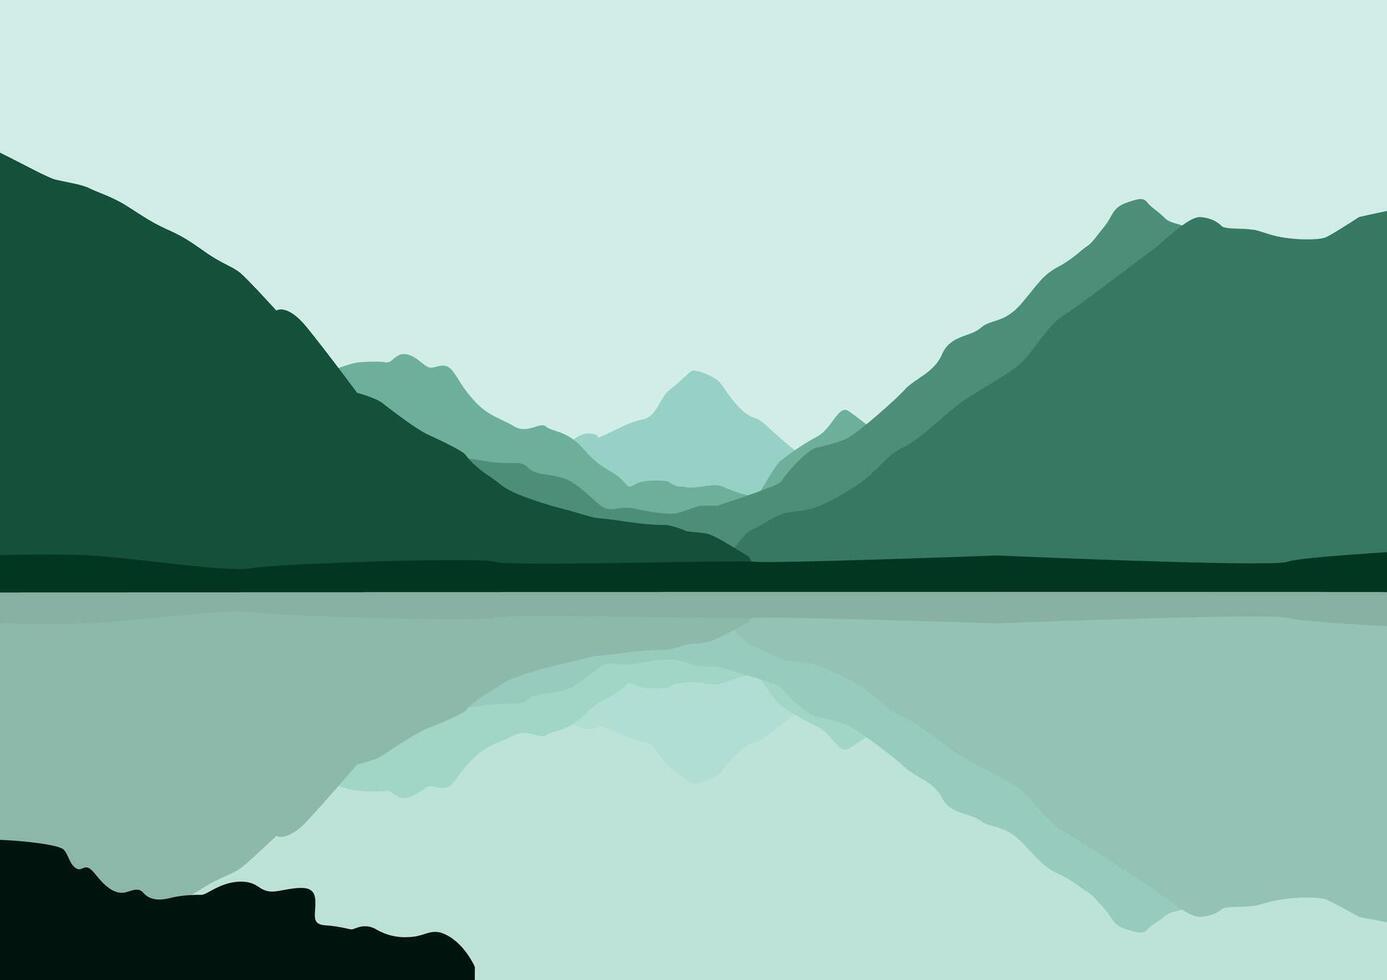 See und Berge Panorama. Illustration im eben Stil. vektor